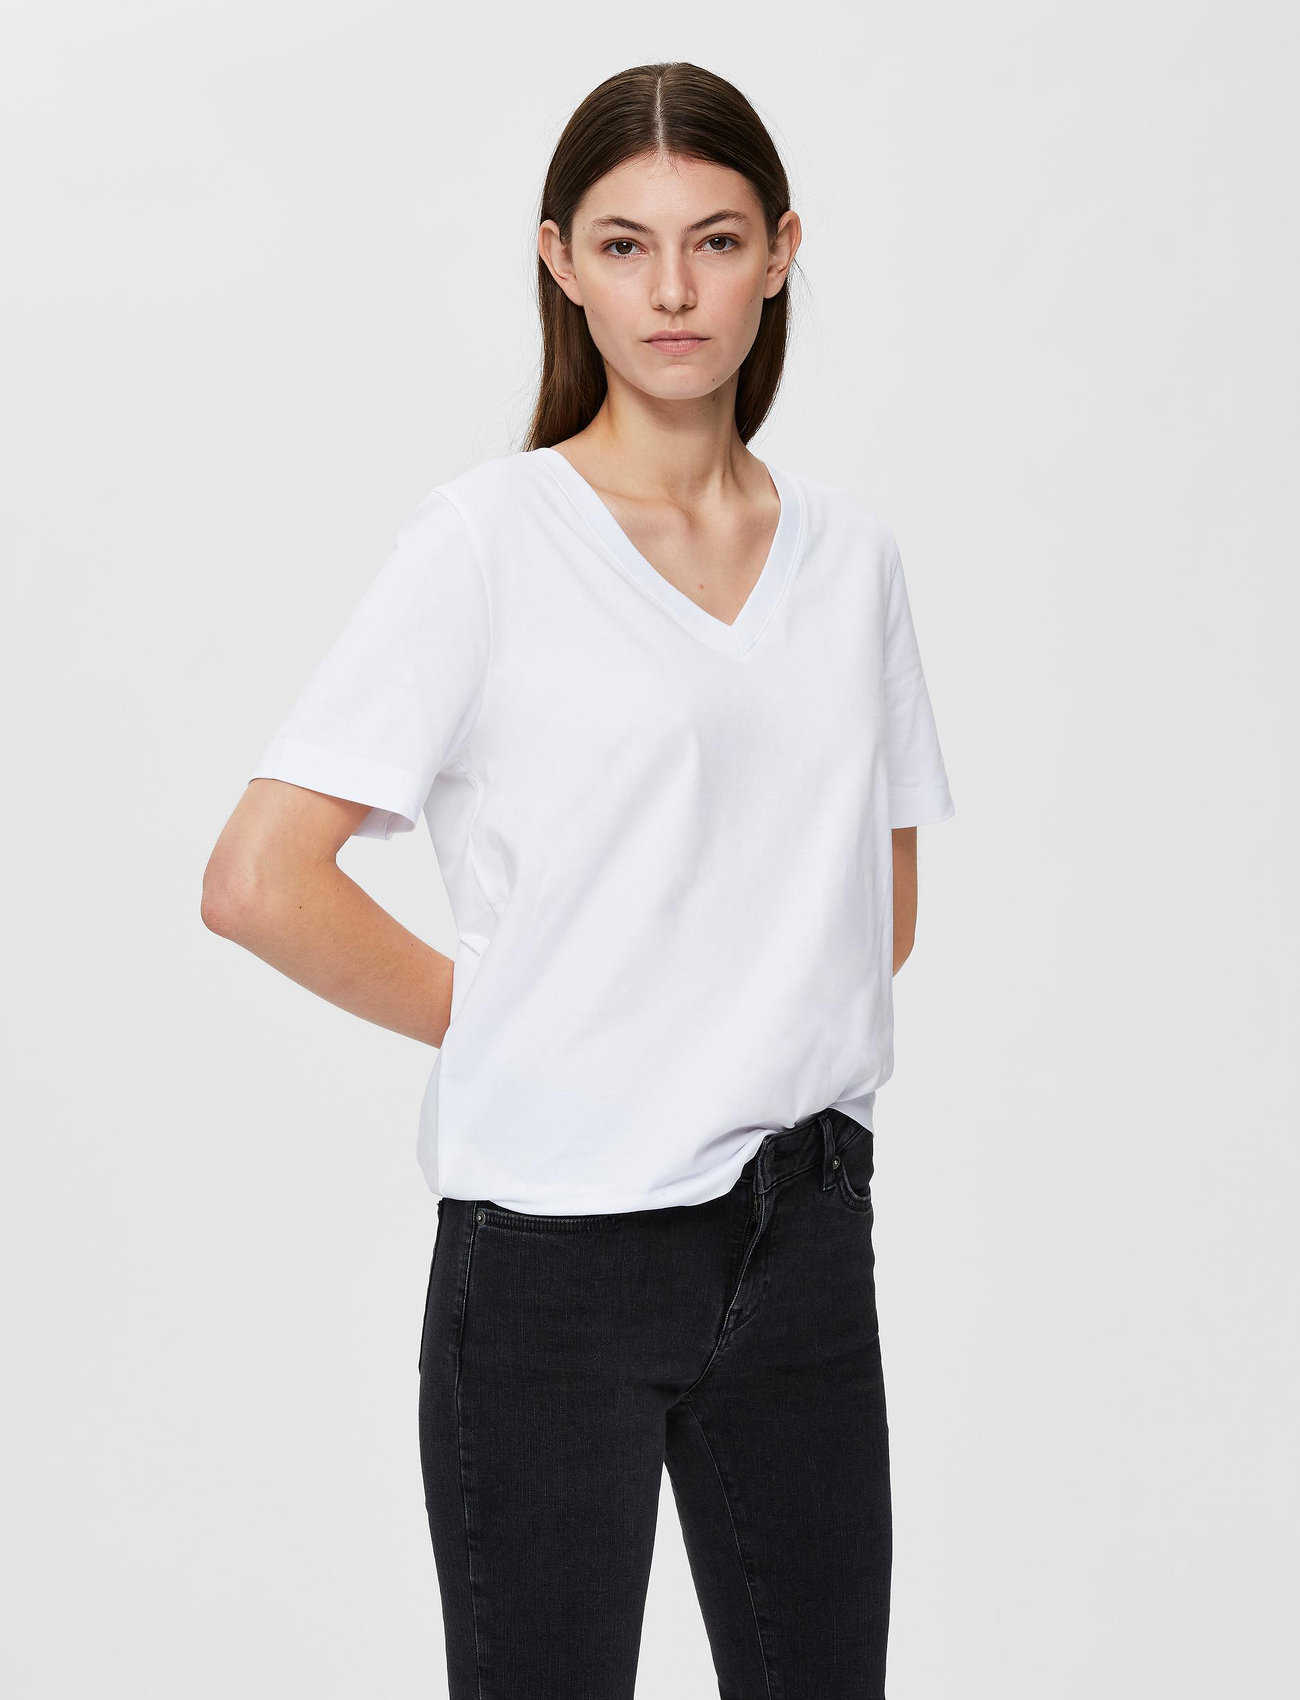 Selected Femme - SLFSTANDARDS V-NECK TEE - t-shirts - bright white - 0